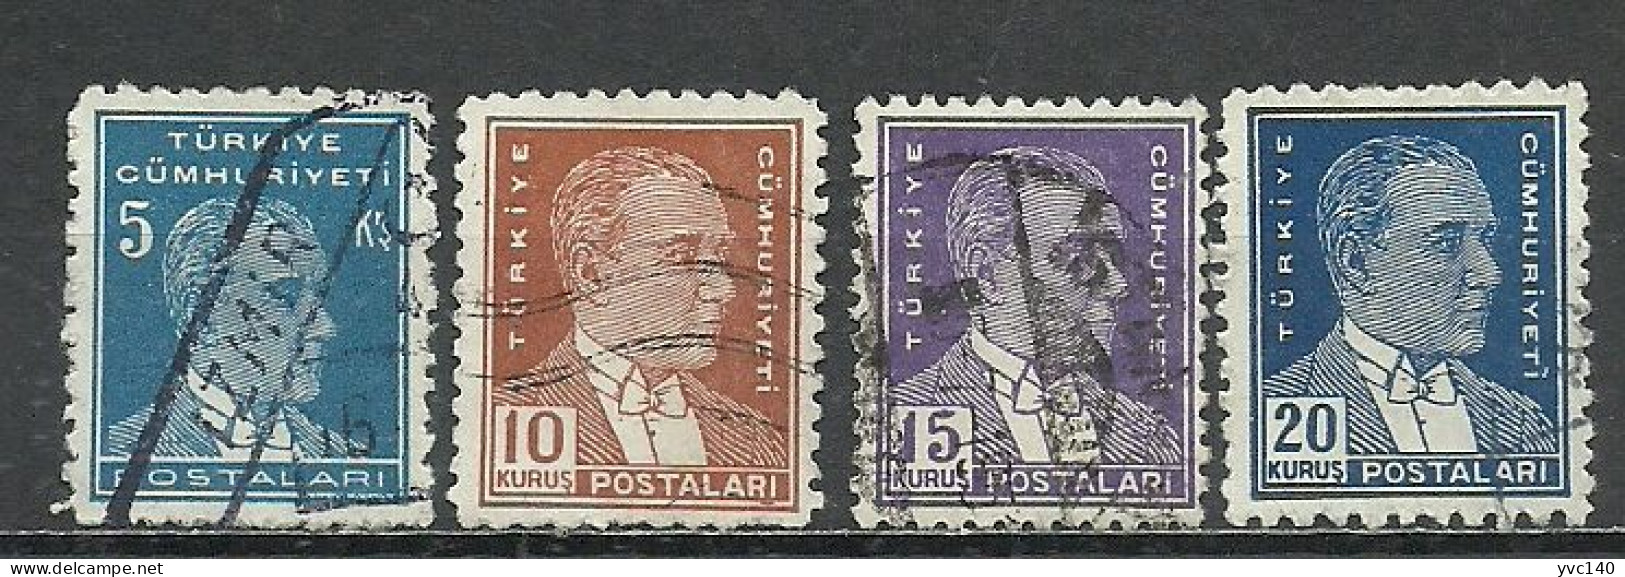 Turkey; 1950 5th Ataturk Issue Stamps - Usati